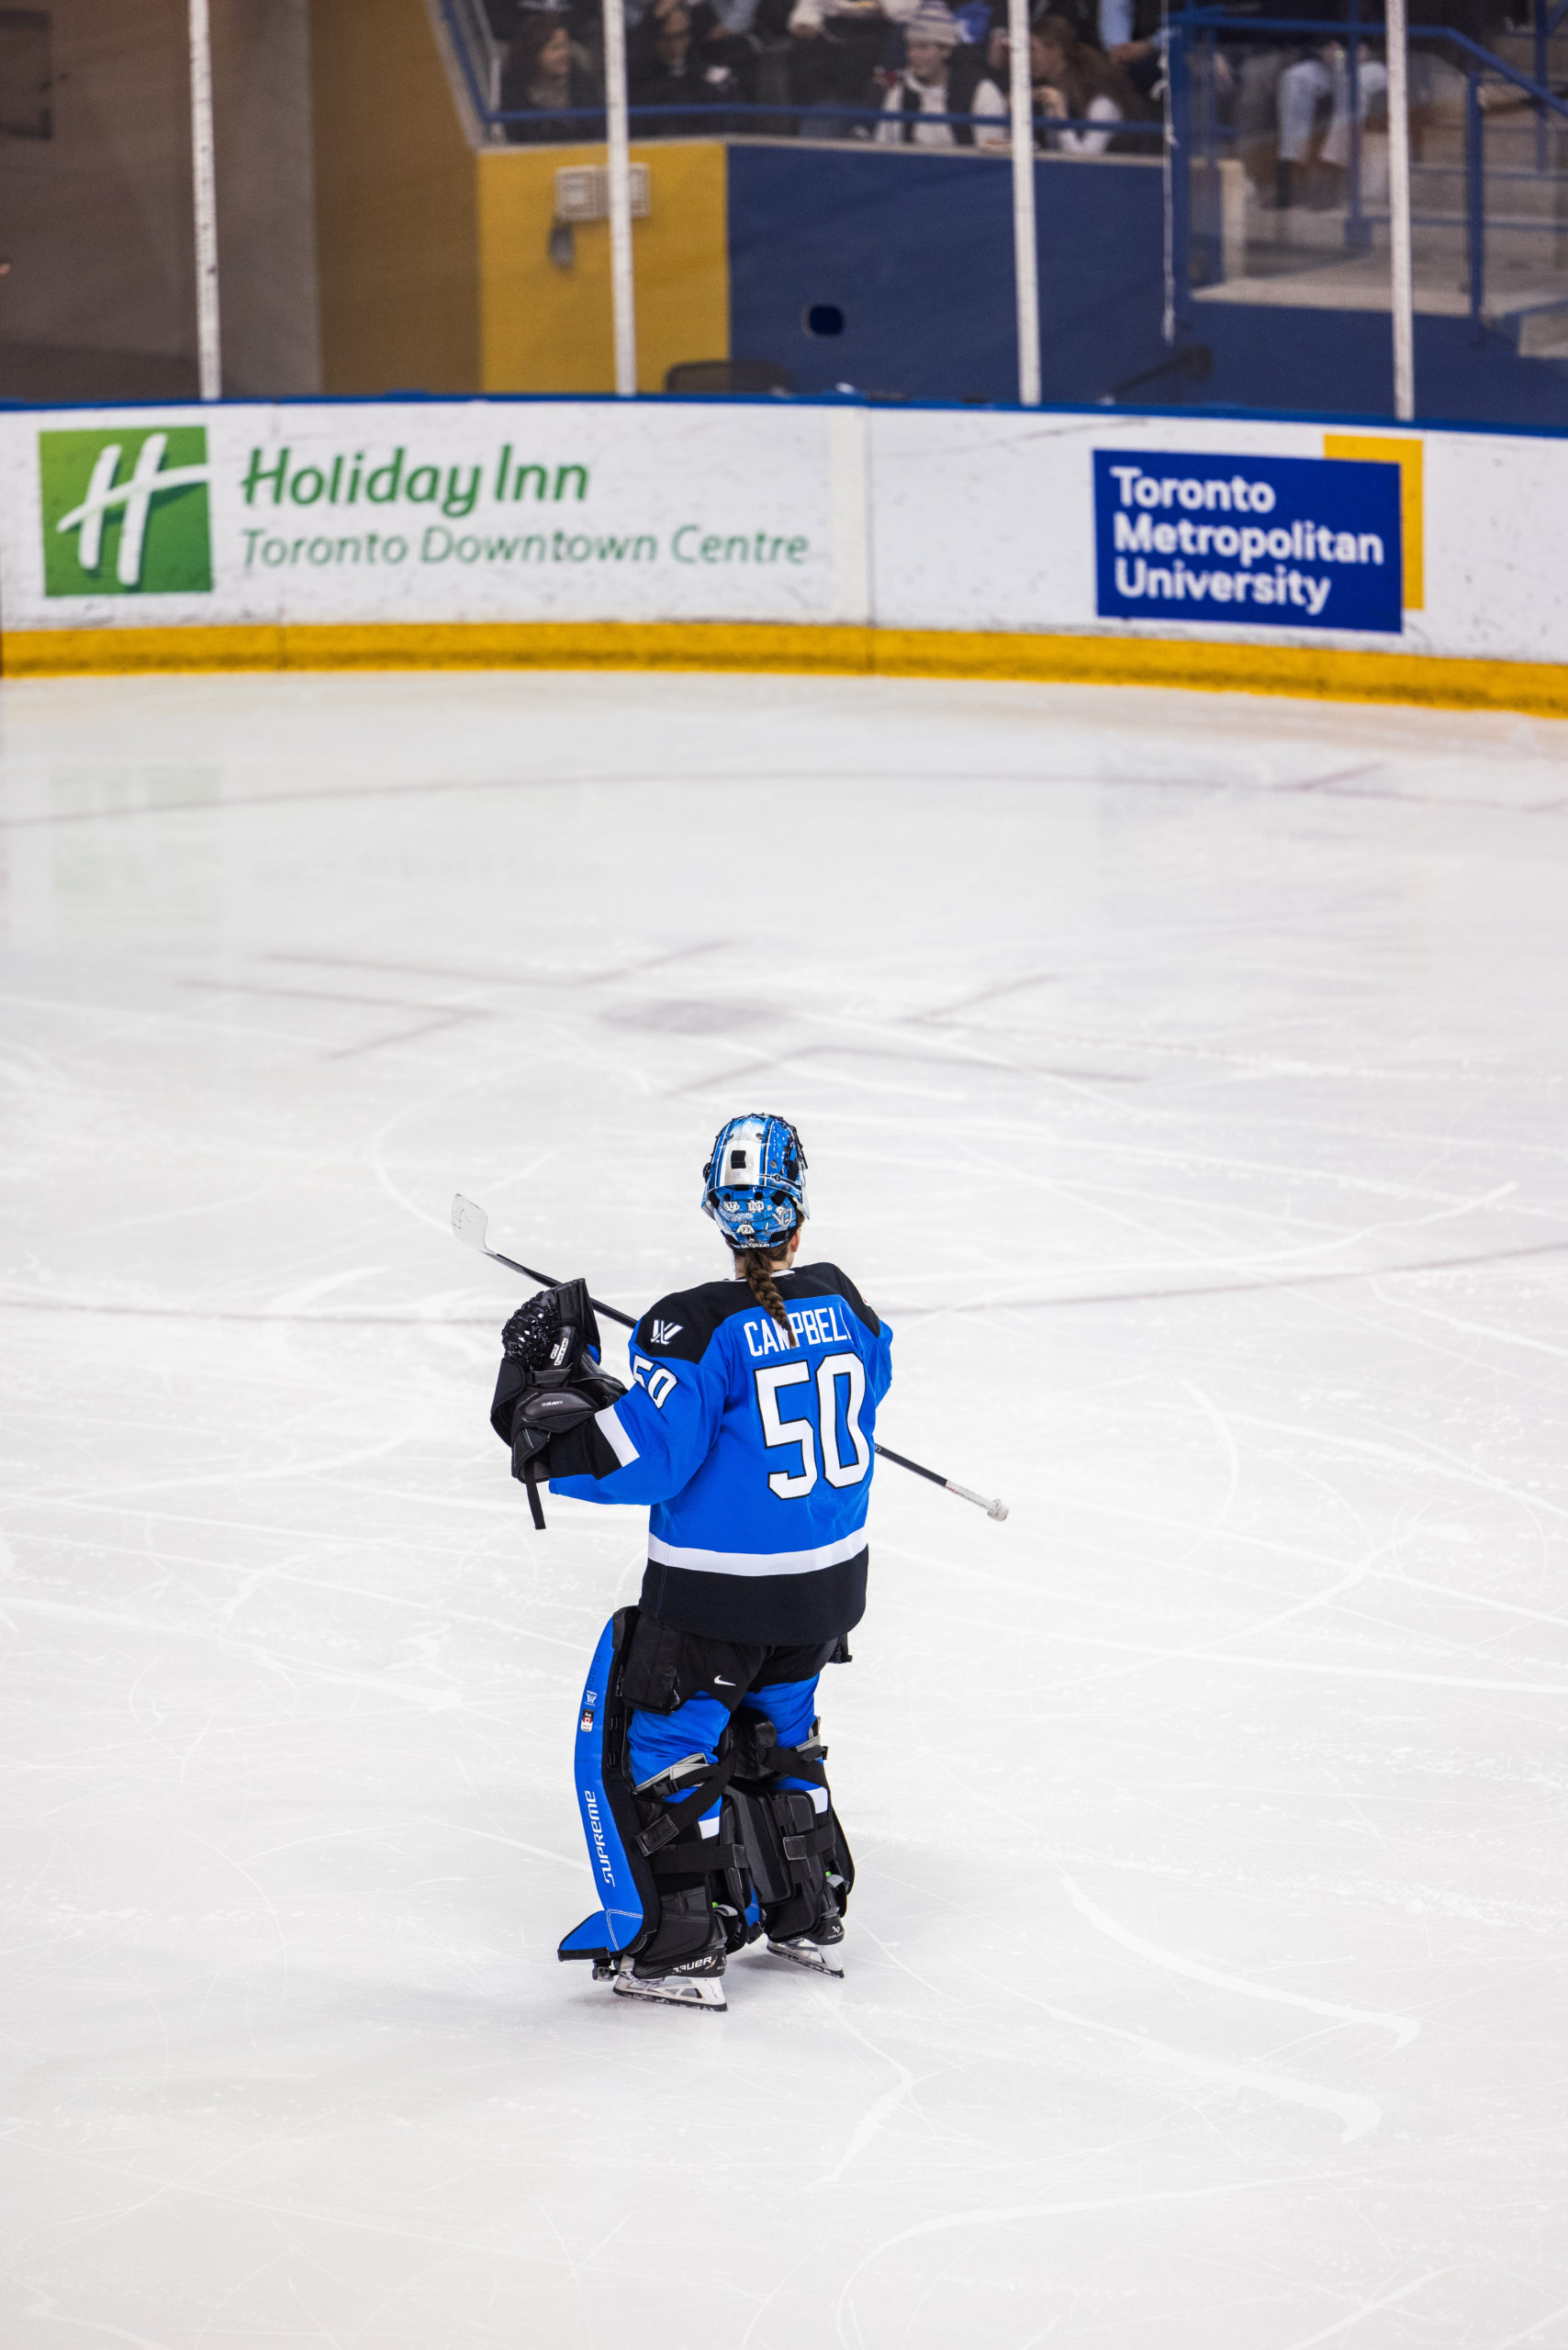 PWHL Toronto goalie skates around the ice